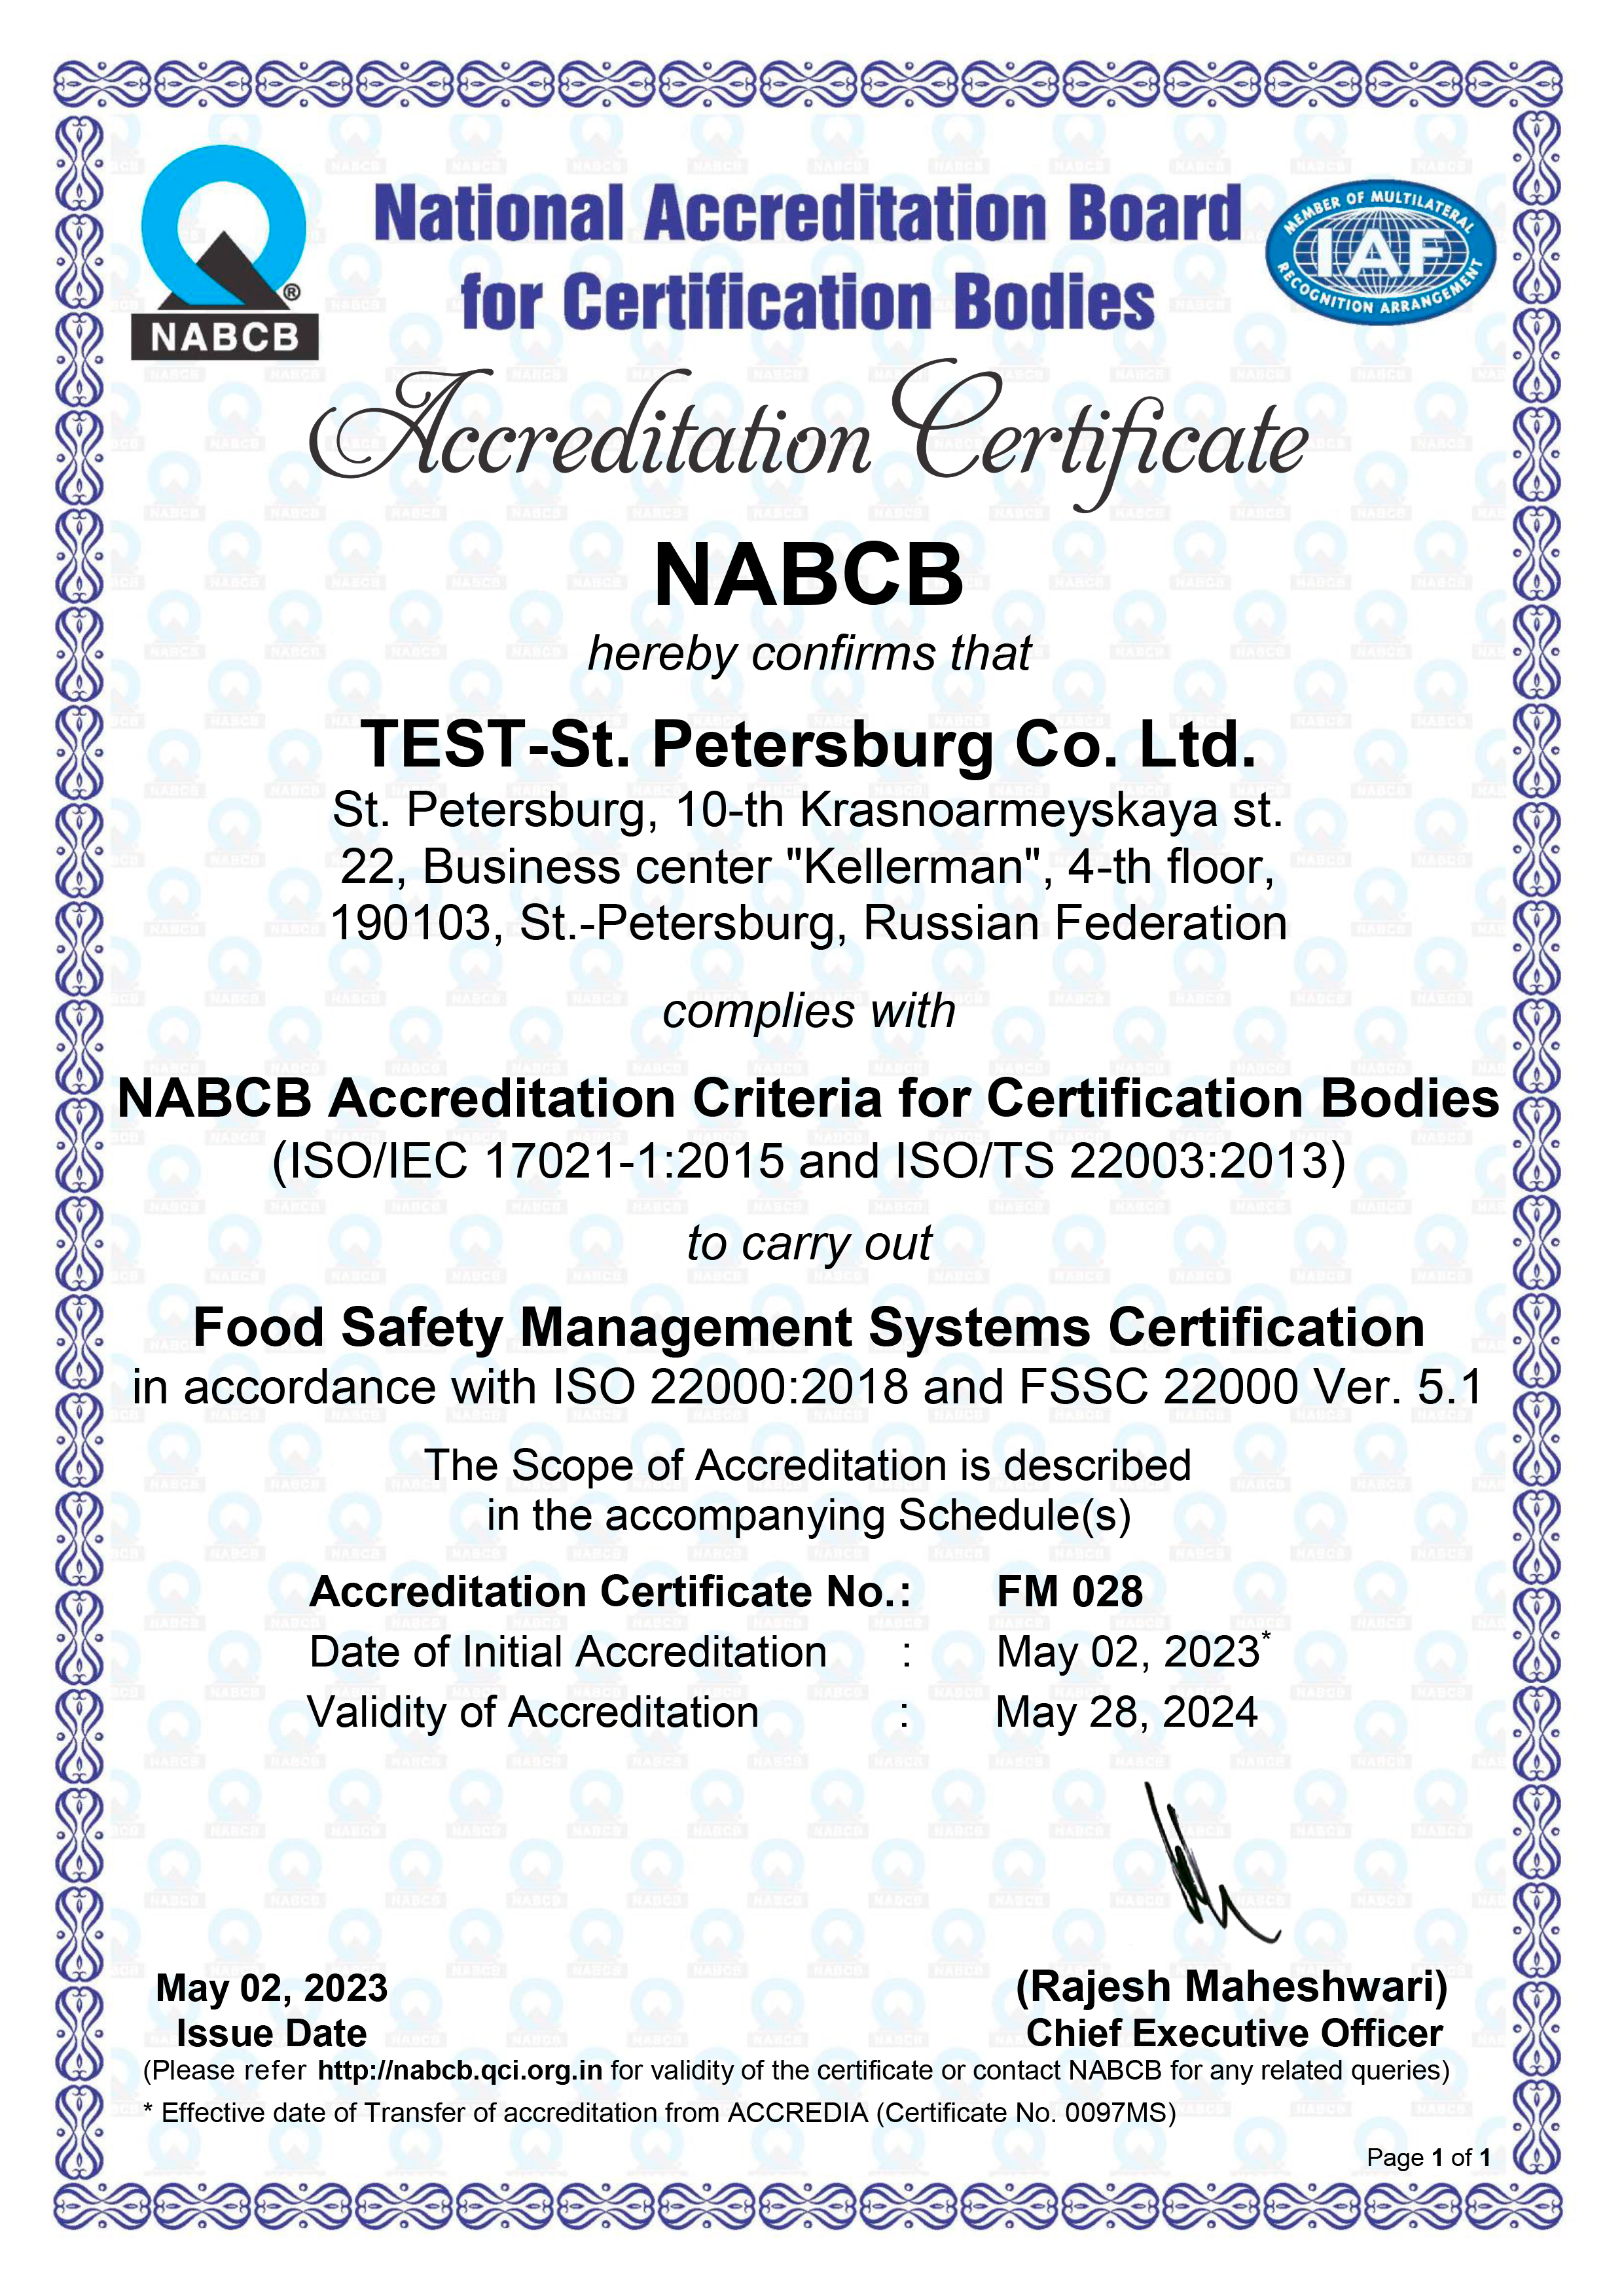 Критерии аккредитации NABCB для органов по сертификации
(ISO/IEC 17021-1:2015 и ISO/TS 22003:2013)